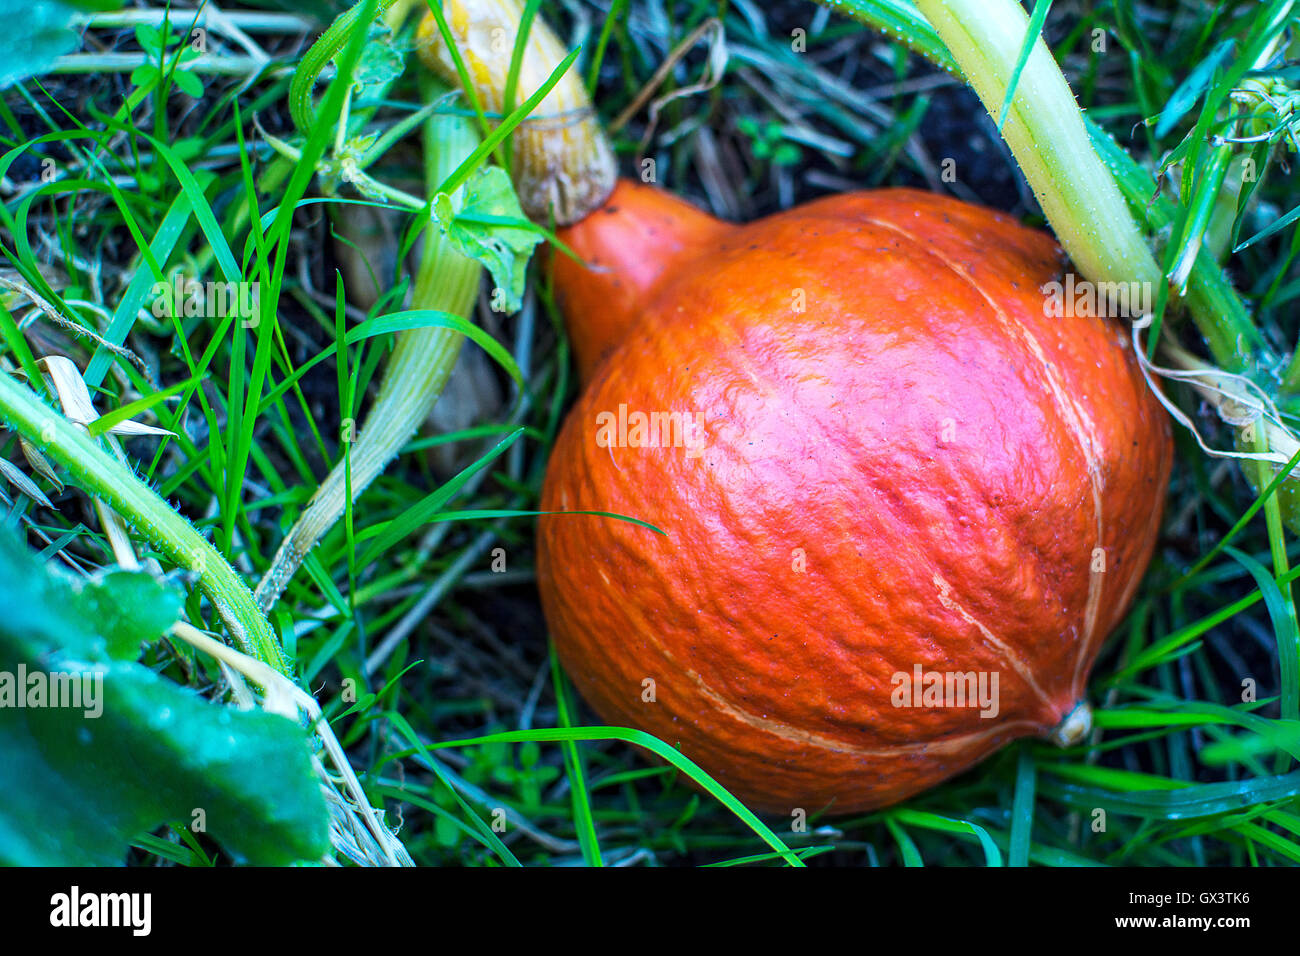 Red kuri squash growing in garden. Cultivated fresh vegetables. Ripe pumpkin in vegetable garden Stock Photo